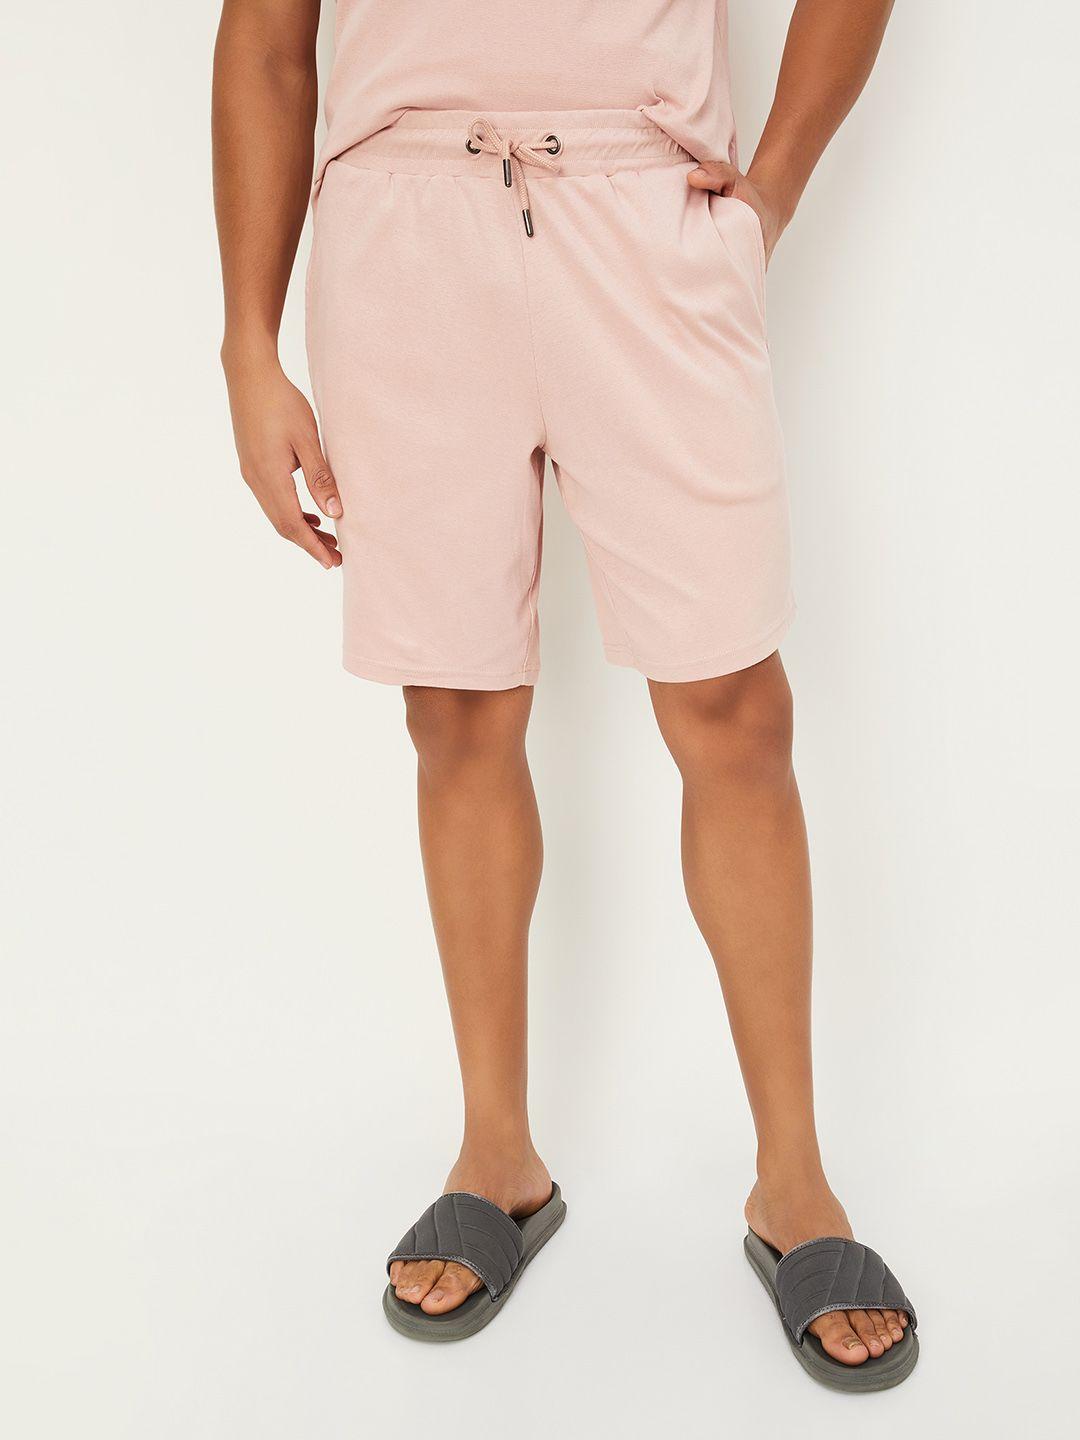 max-men-mid-rise-pure-cotton-shorts